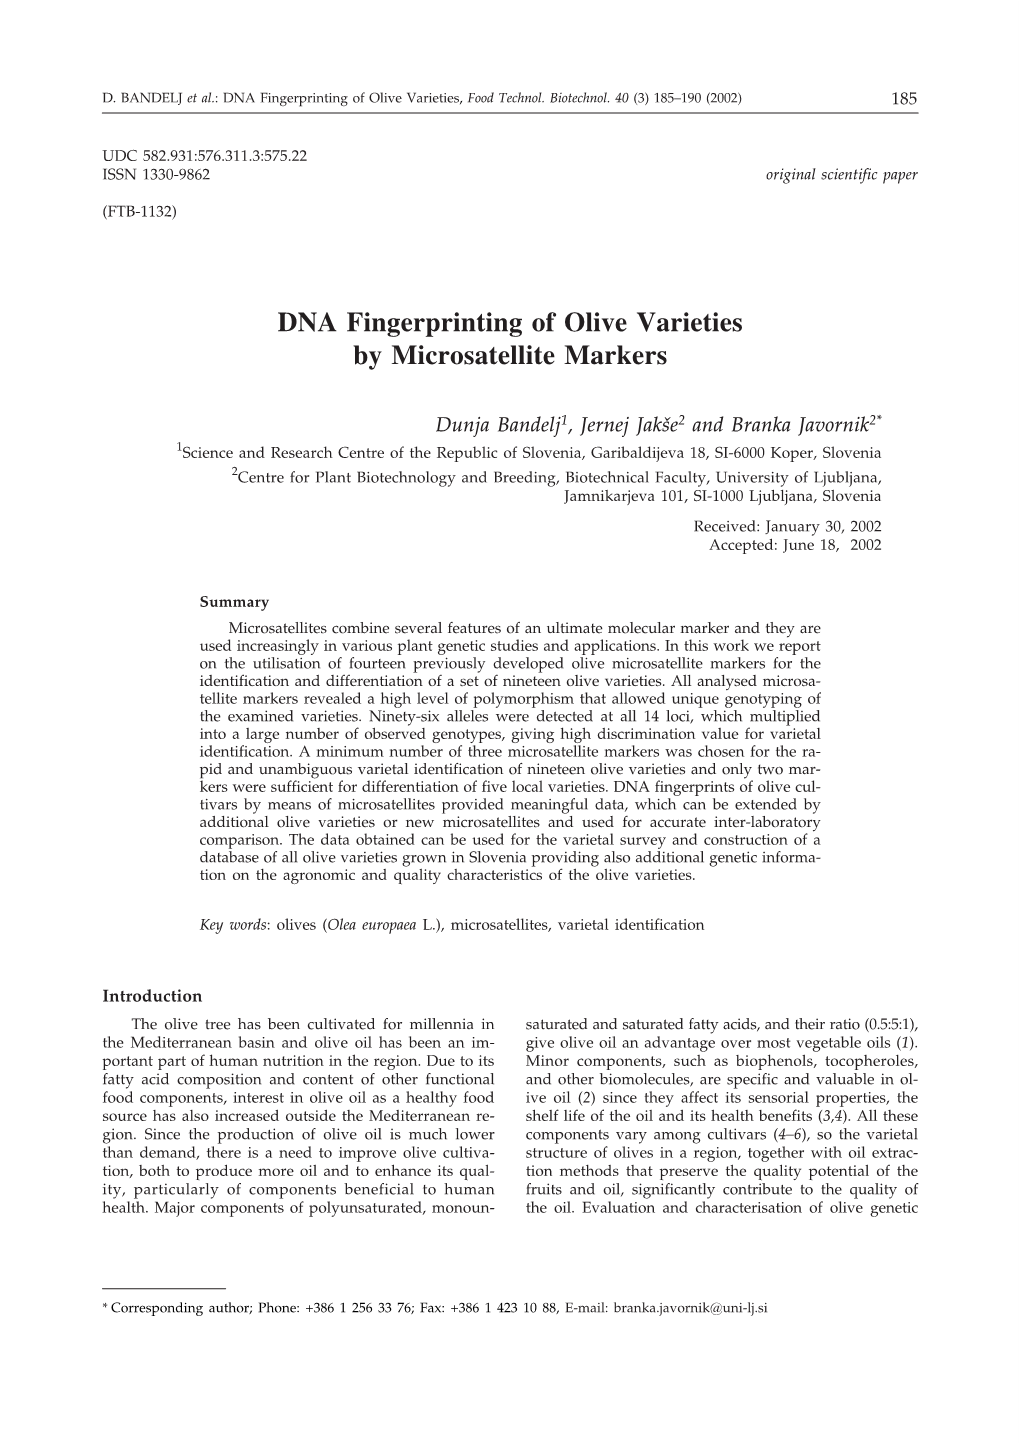 DNA Fingerprinting of Olive Varieties by Microsatellite Markers